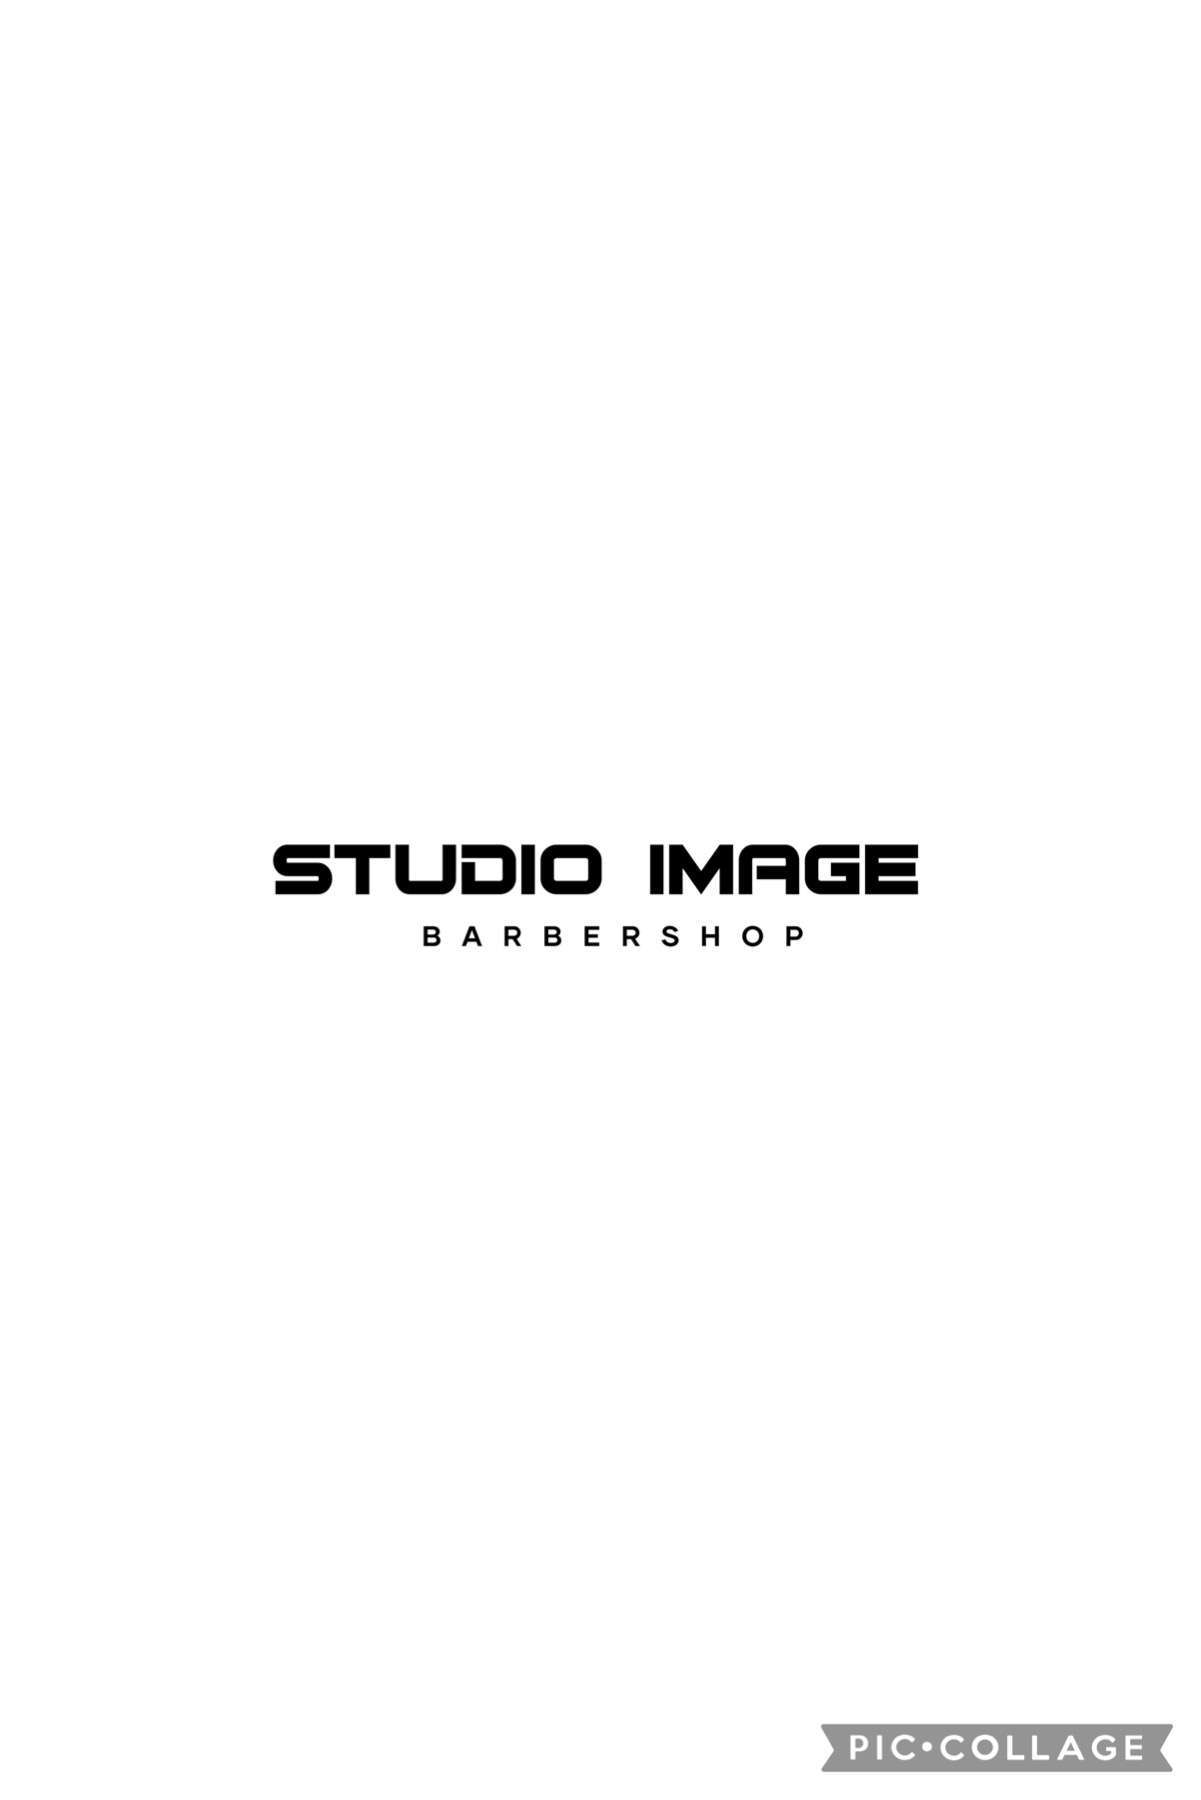 Logo studio image barber